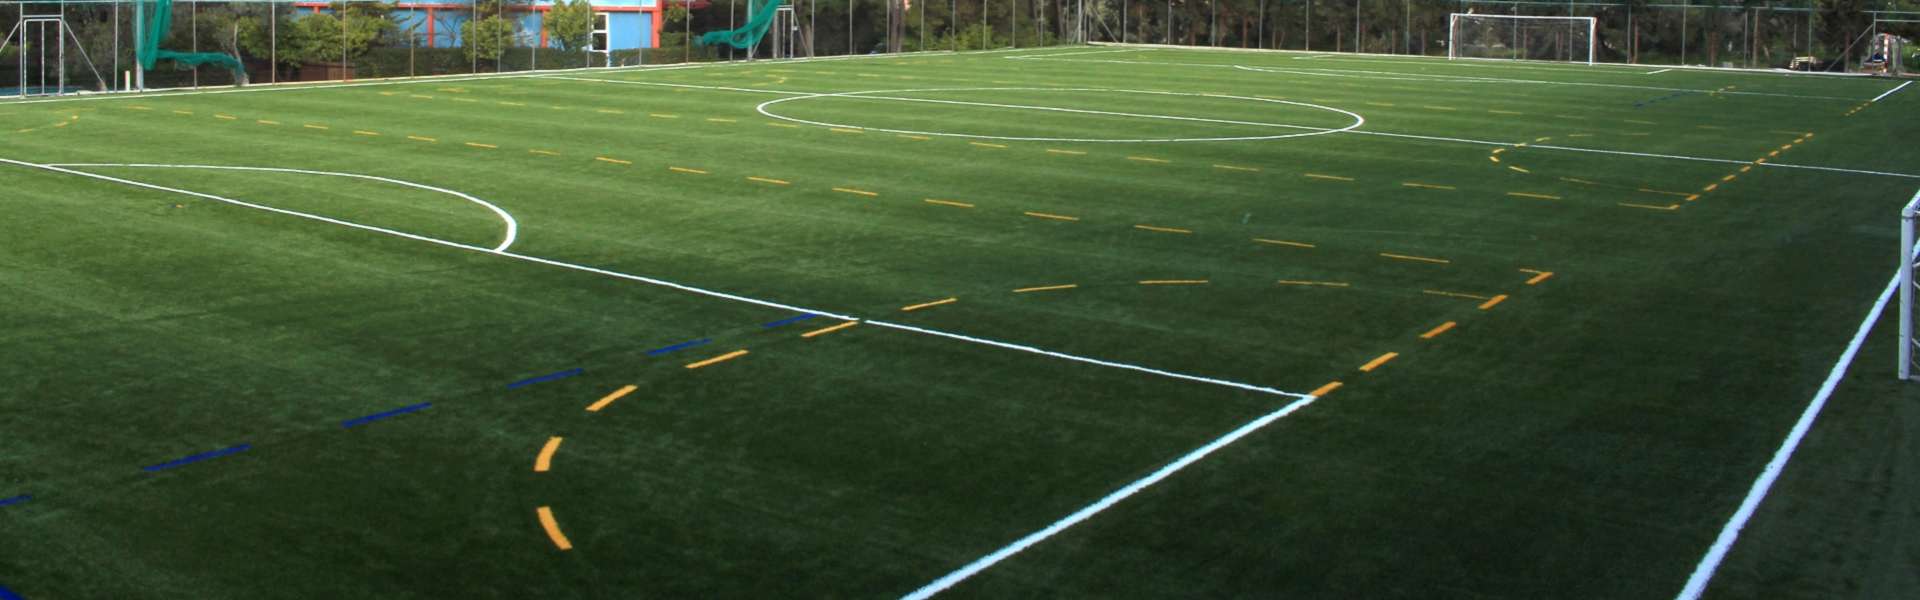 outdoor fields courts sportcamp sports